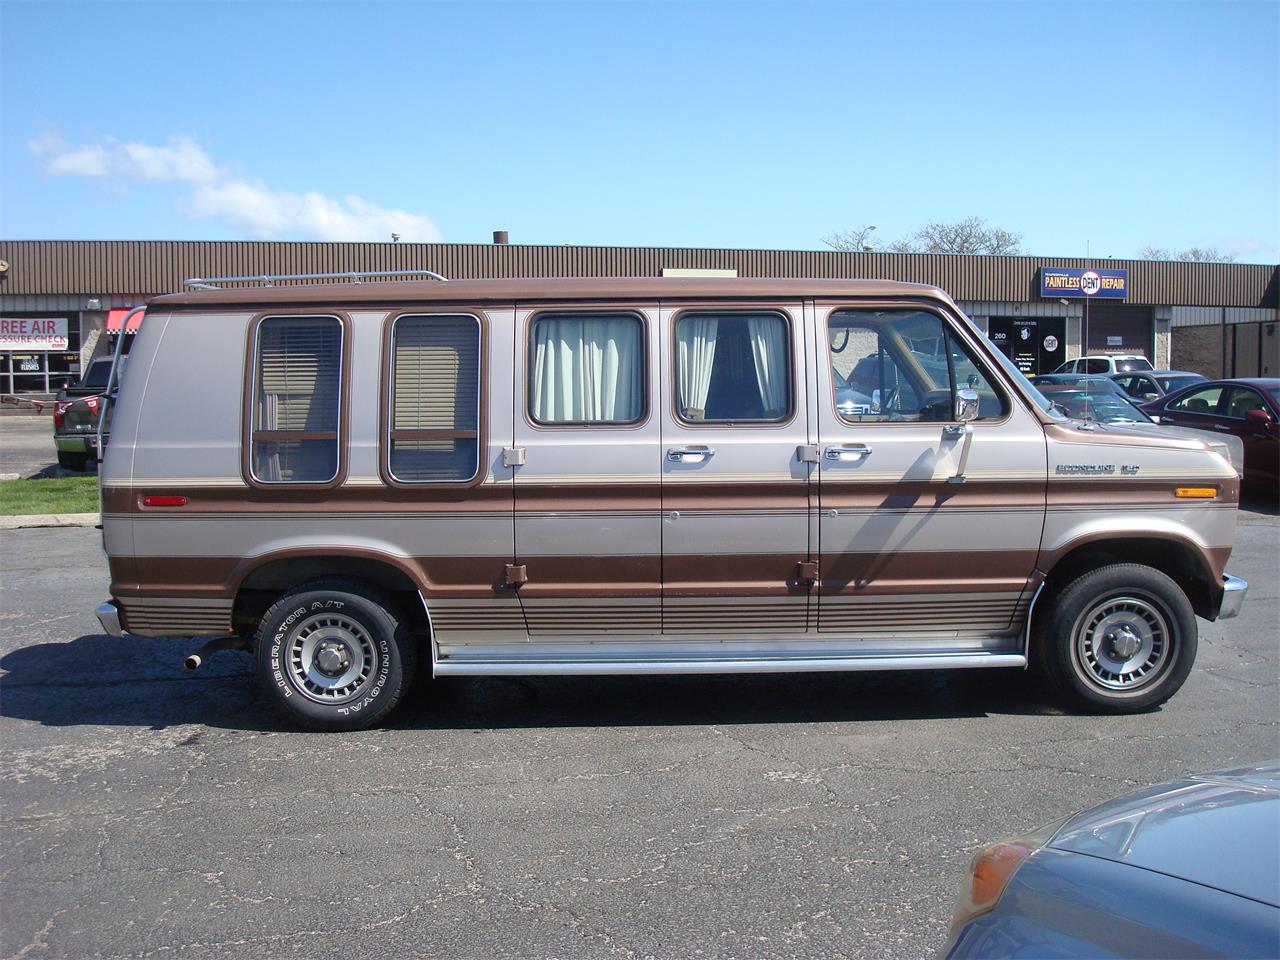 ford conversion vans for sale